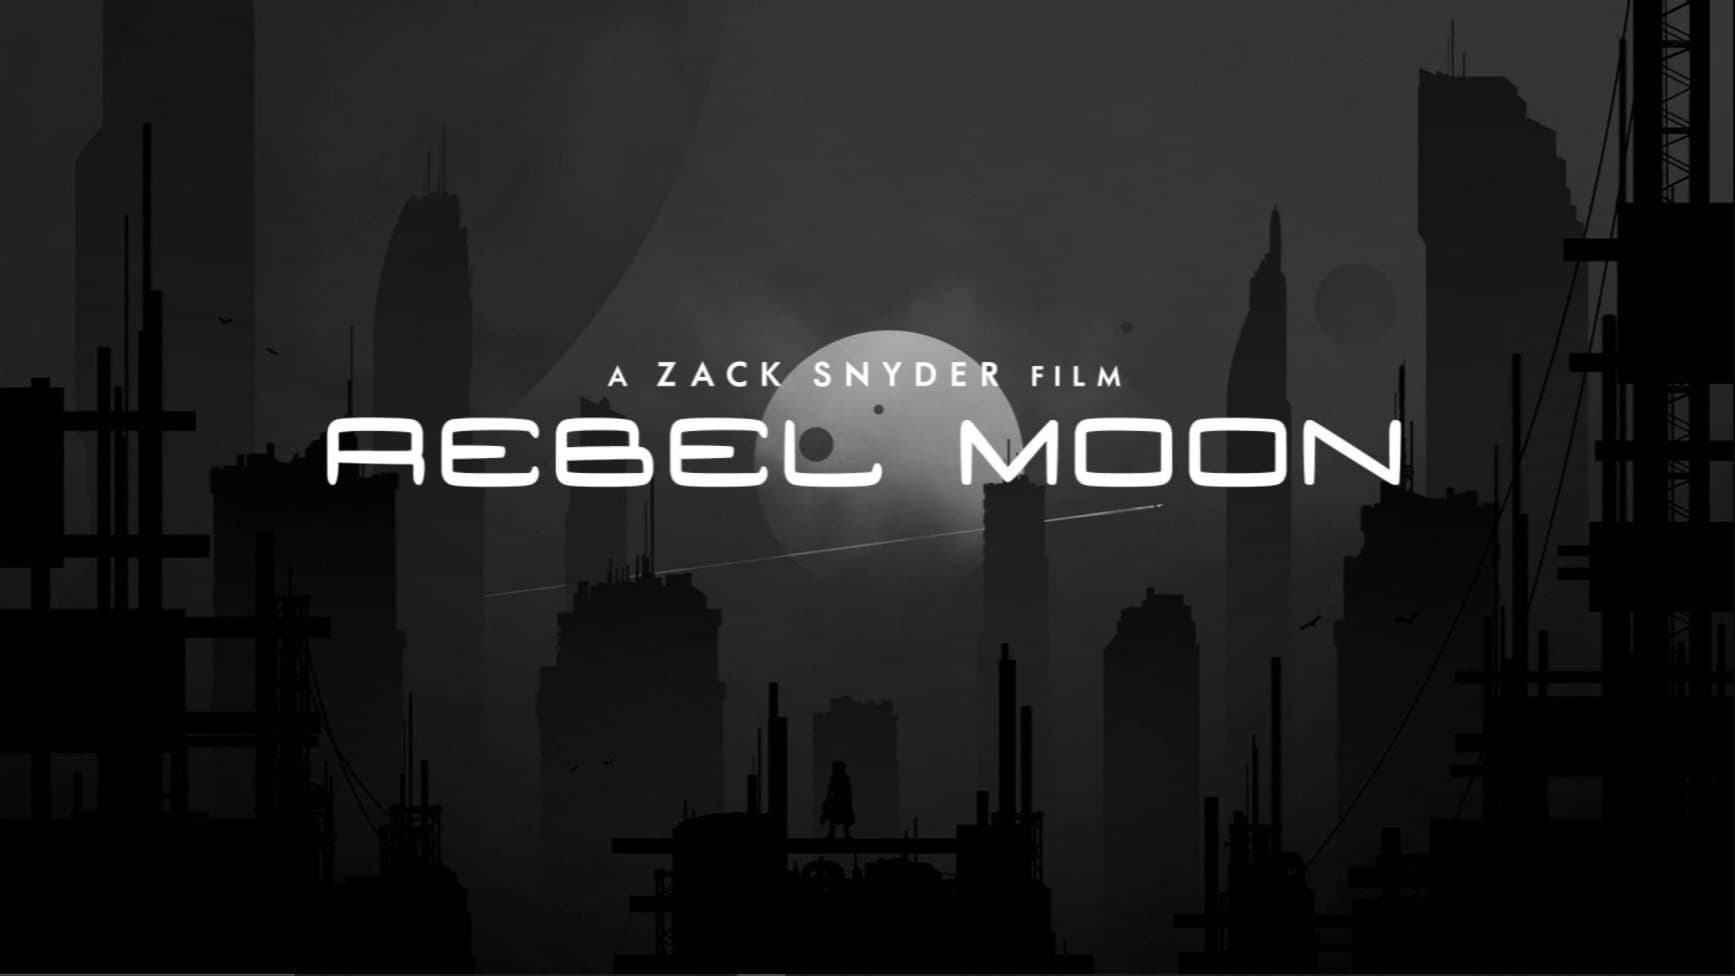 Rebel Moon: Netflix divulga trailer do novo filme de Zack Snyder